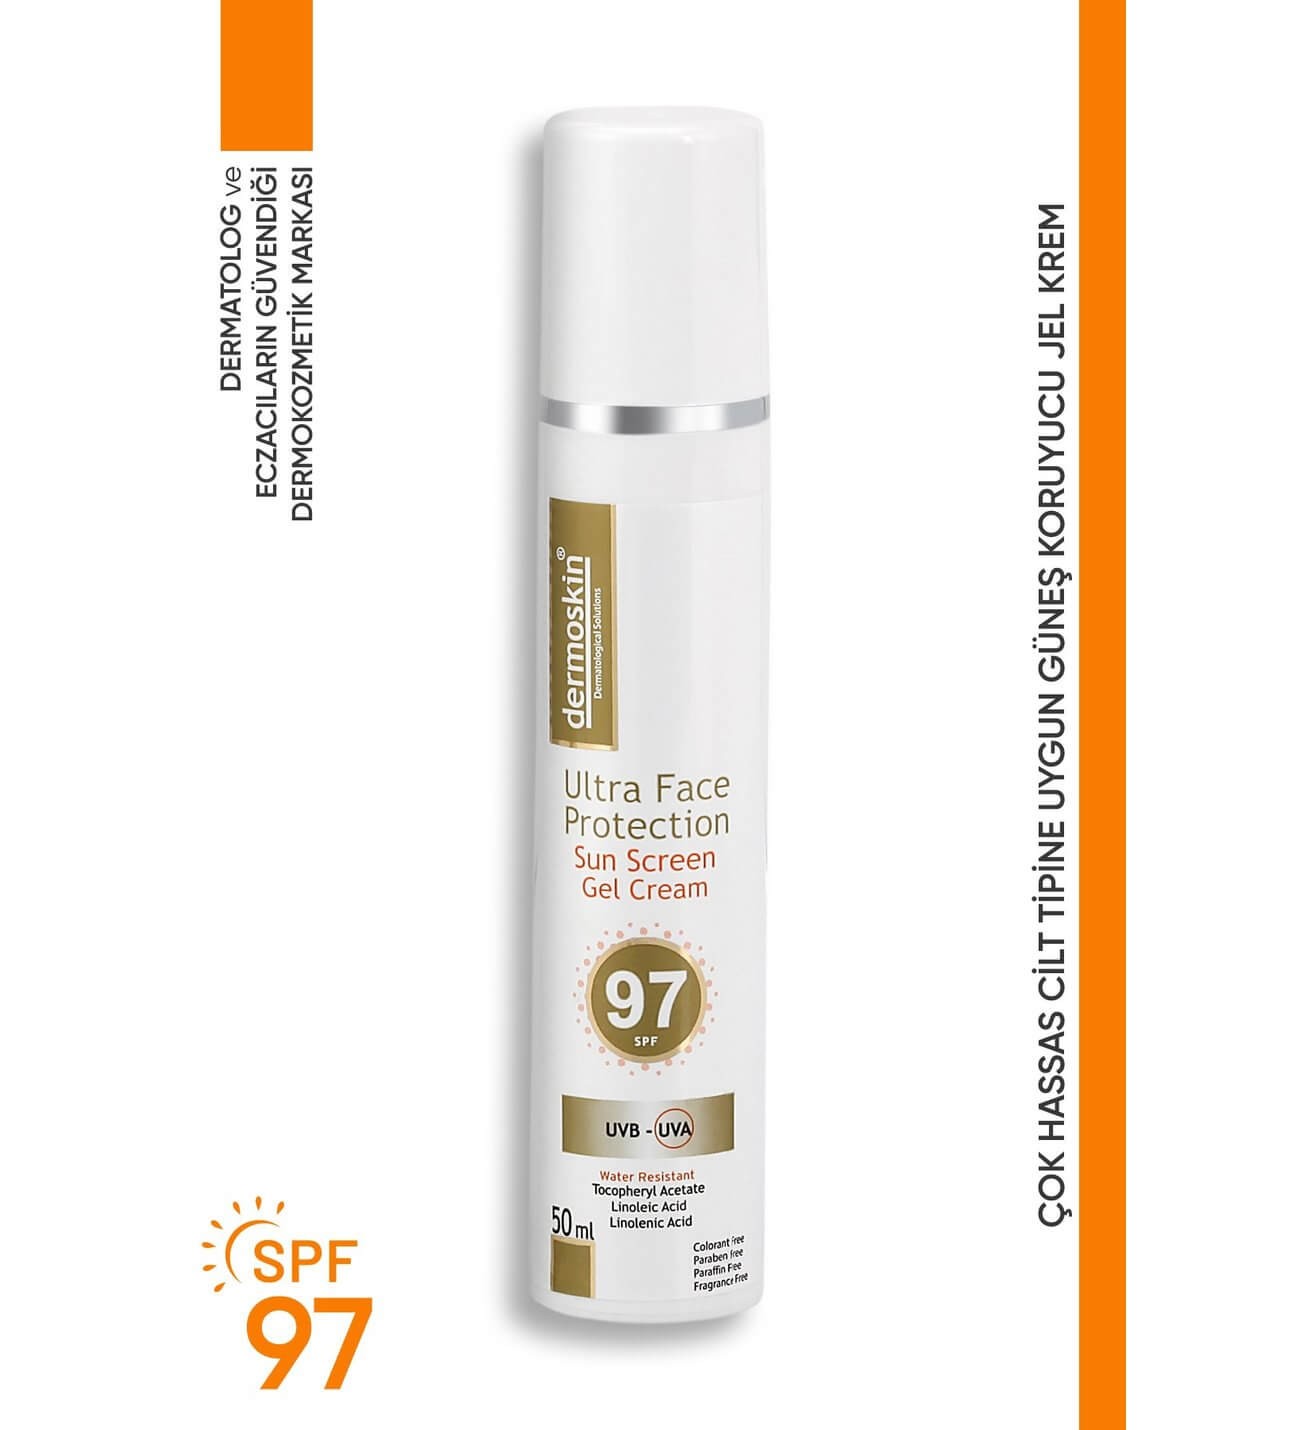 Outlet - Dermoskin SPF 50+ Ultra Face Protection Gel Cream 97 - 50 ml